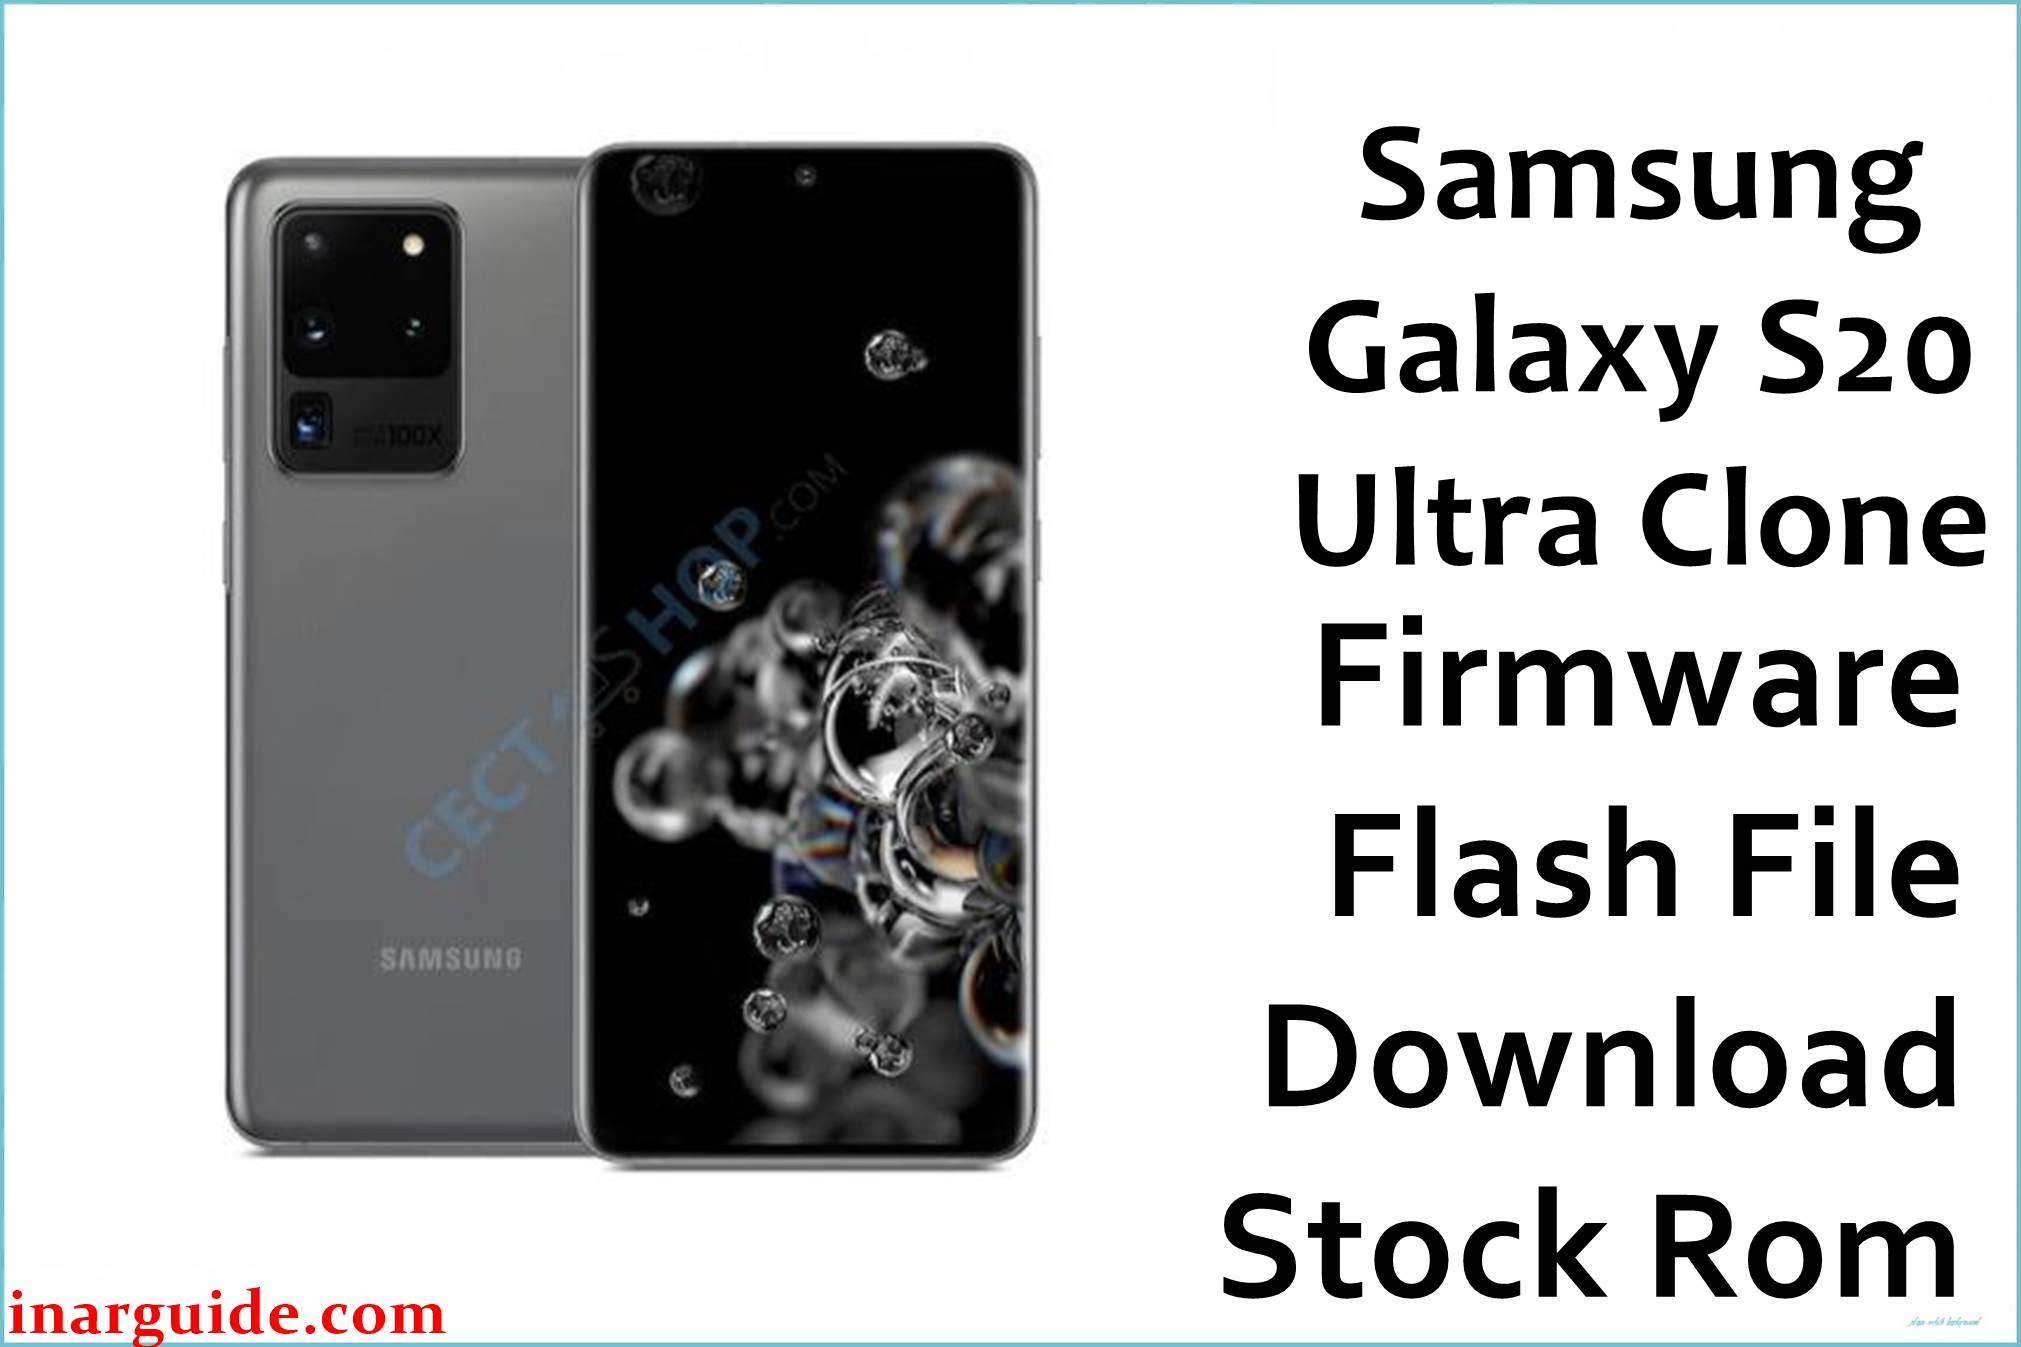 Samsung Galaxy S20 Ultra Clone